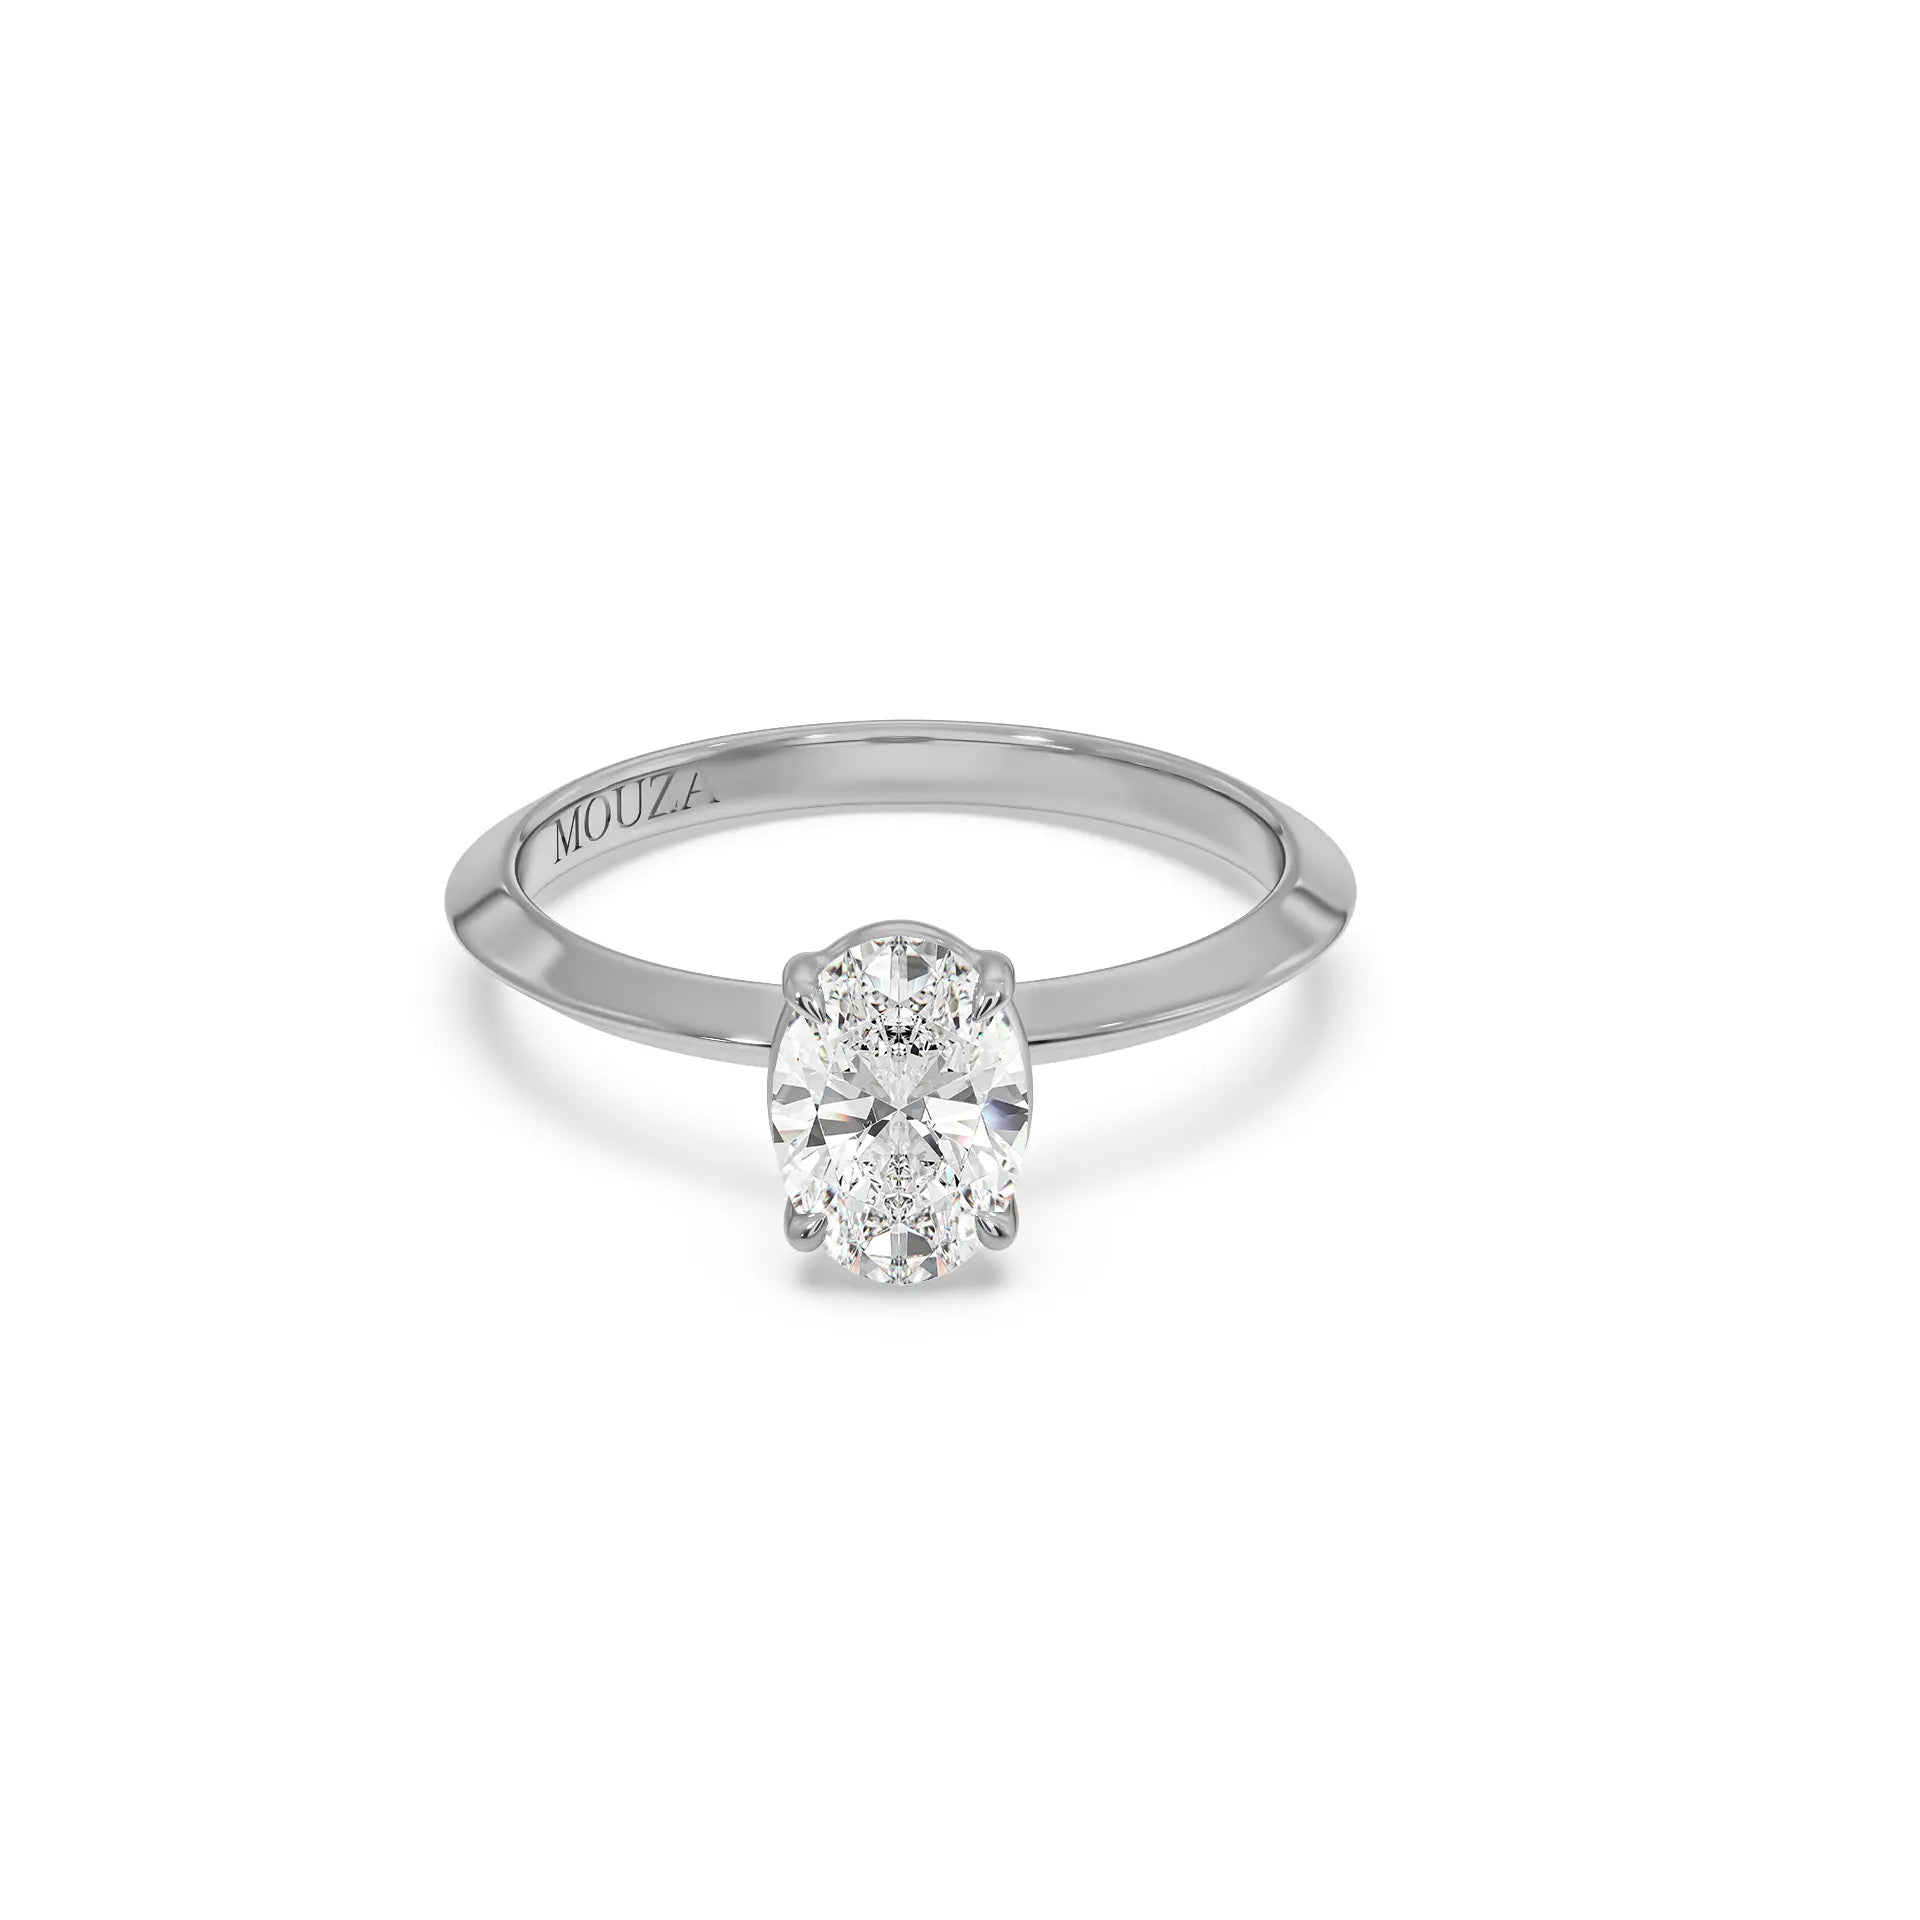 1 Carat Natural Oval Diamond - Engagement Rings London